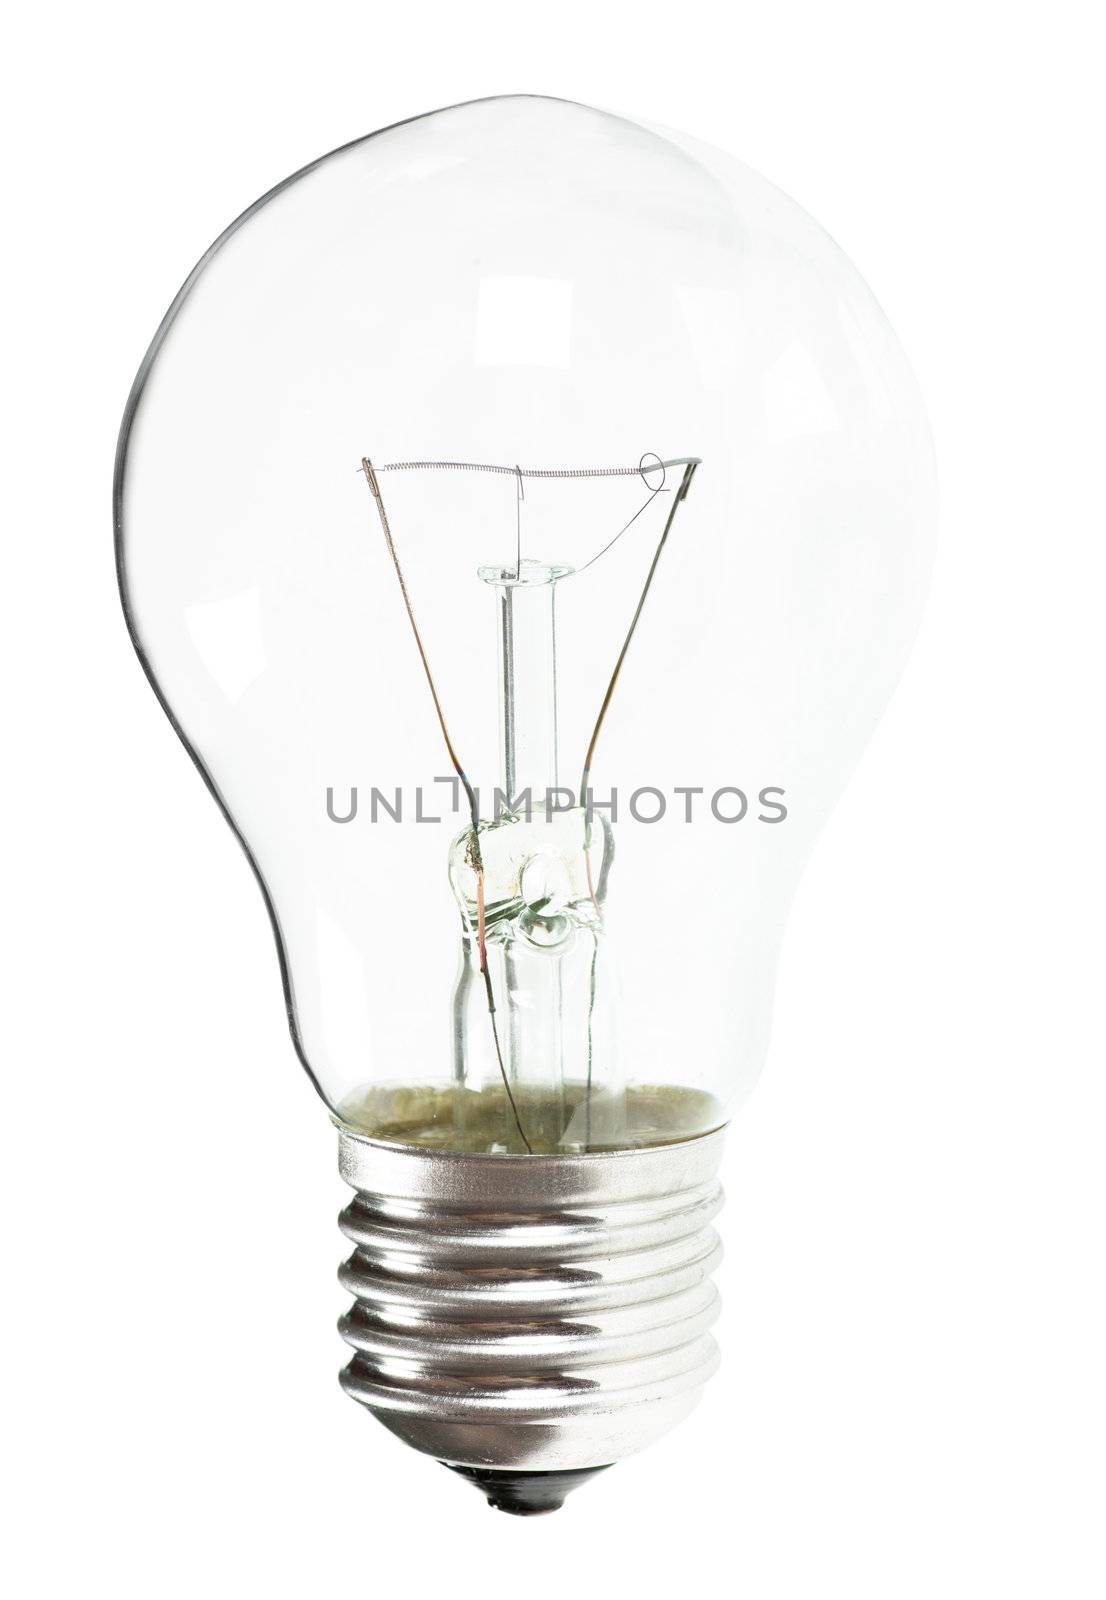 Macro view of a glass light bulb